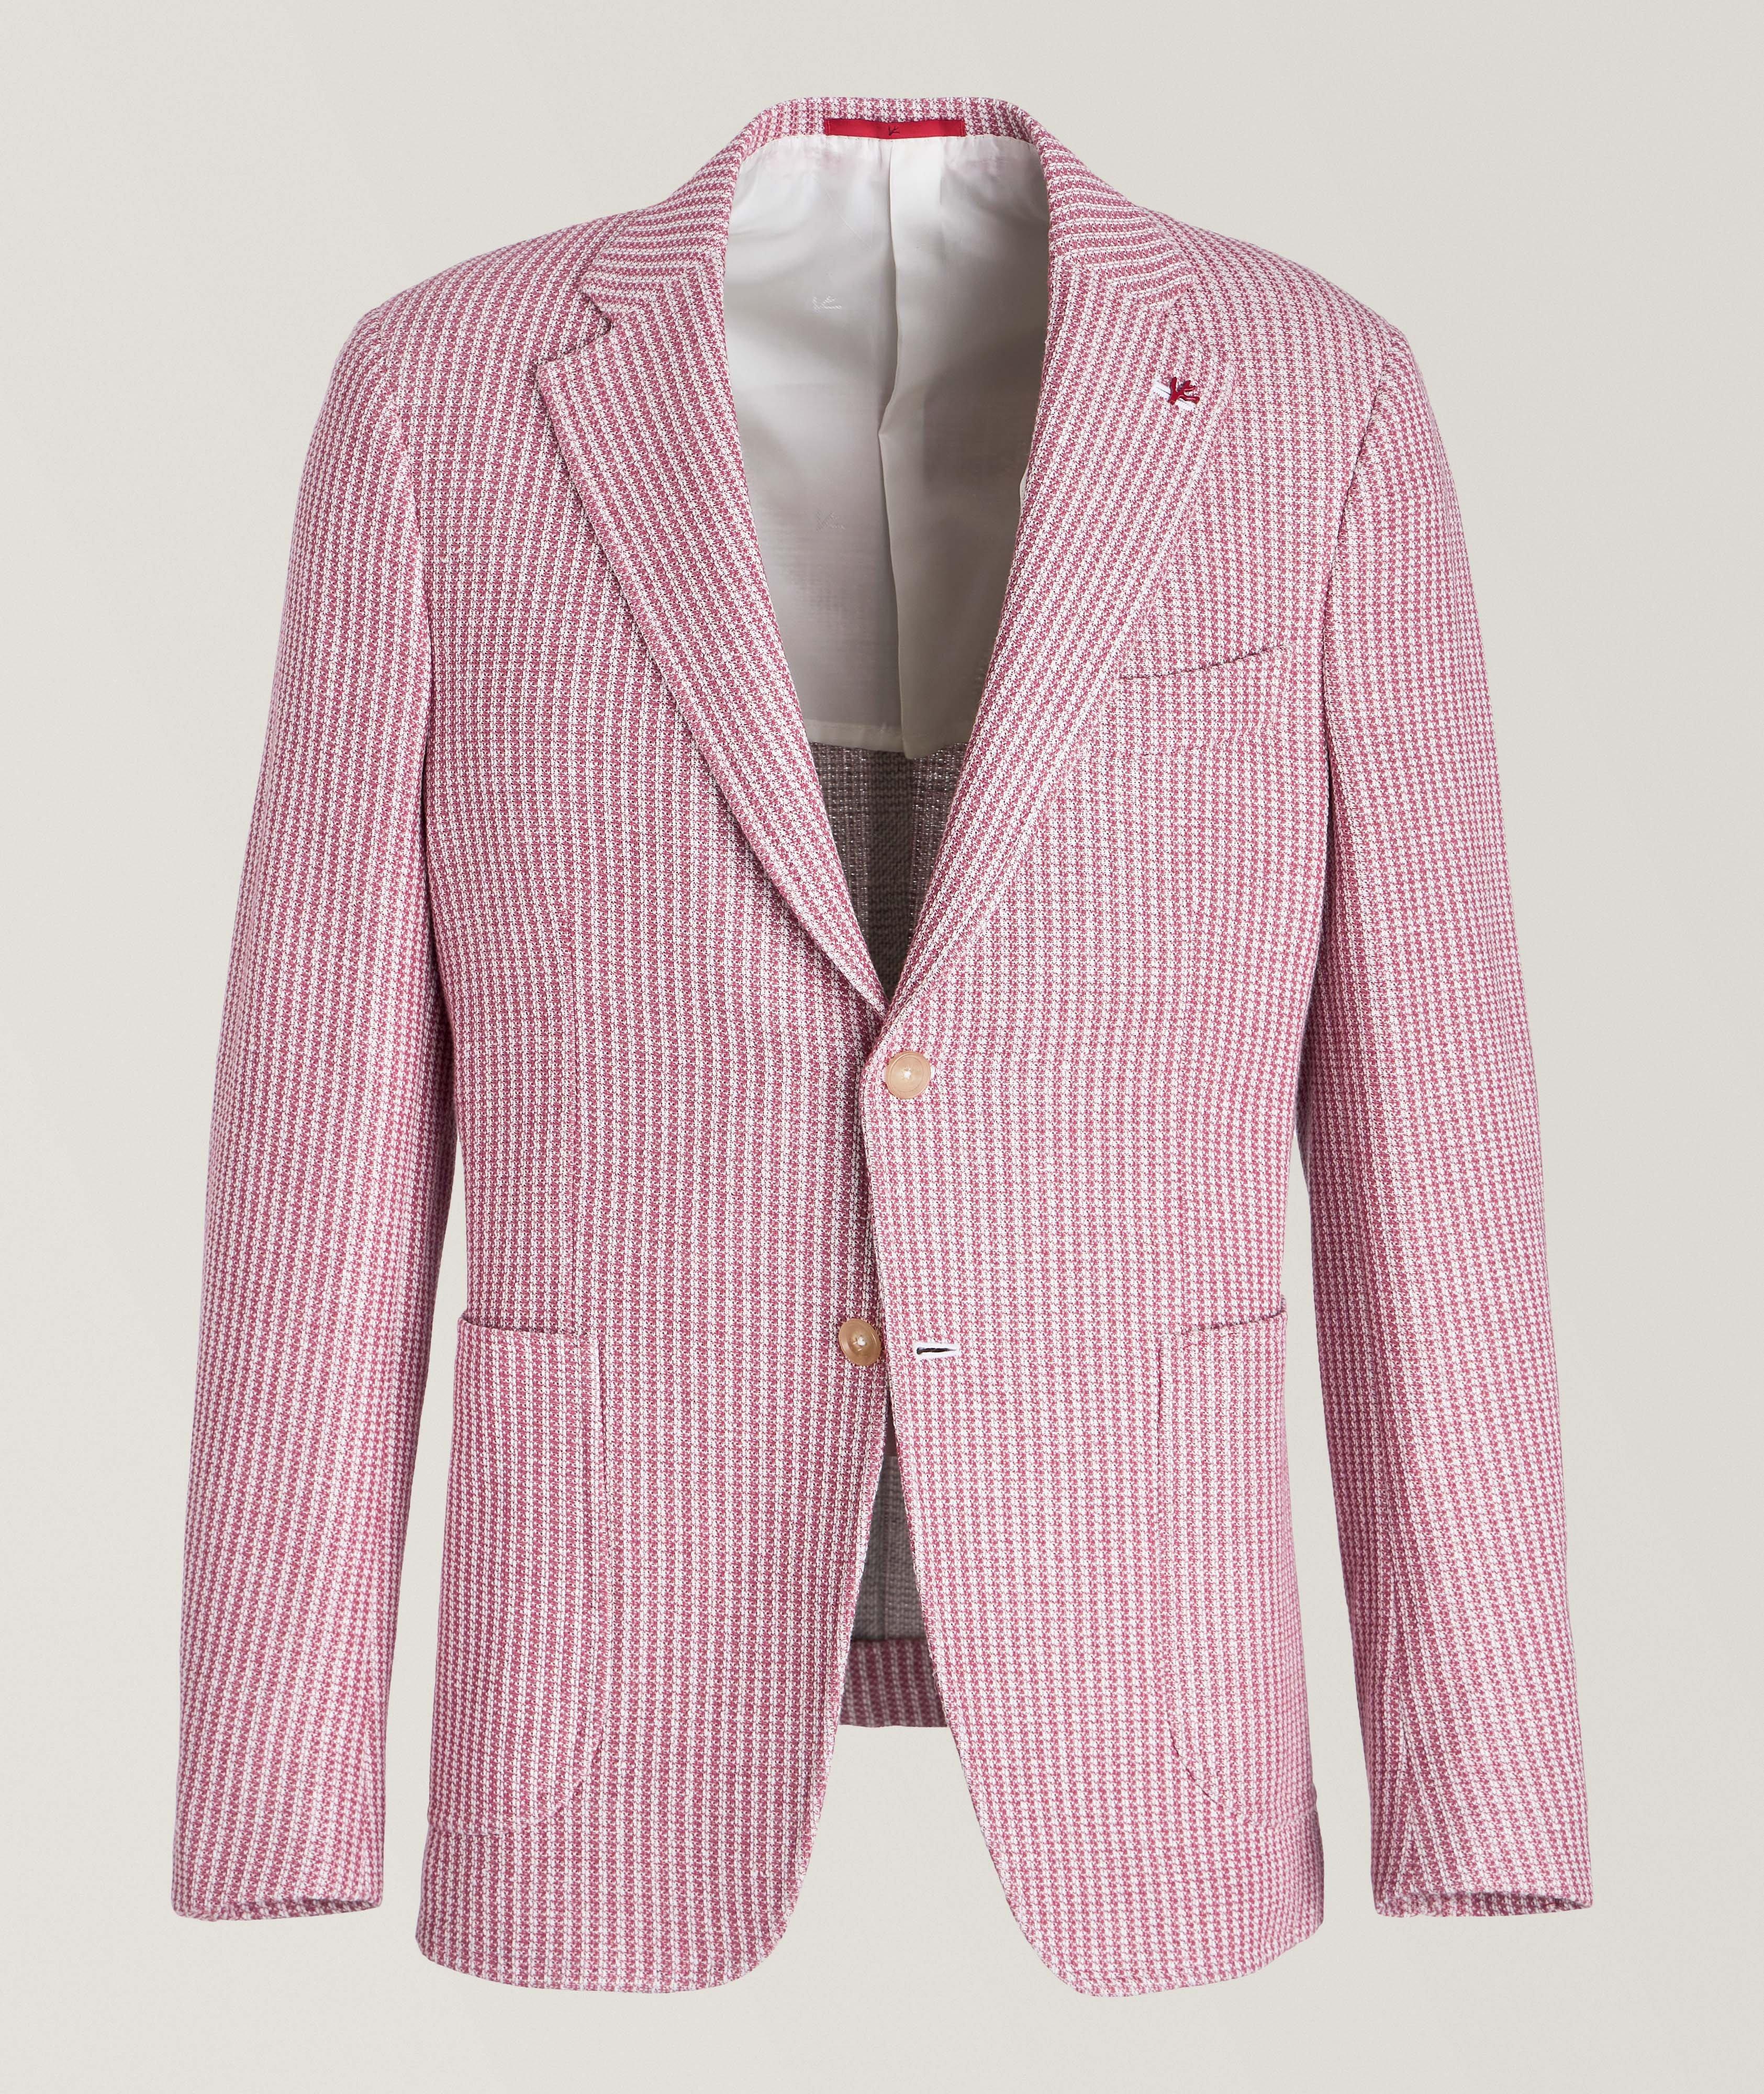 Capri Houndstooth Cotton-Blend Sport Jacket